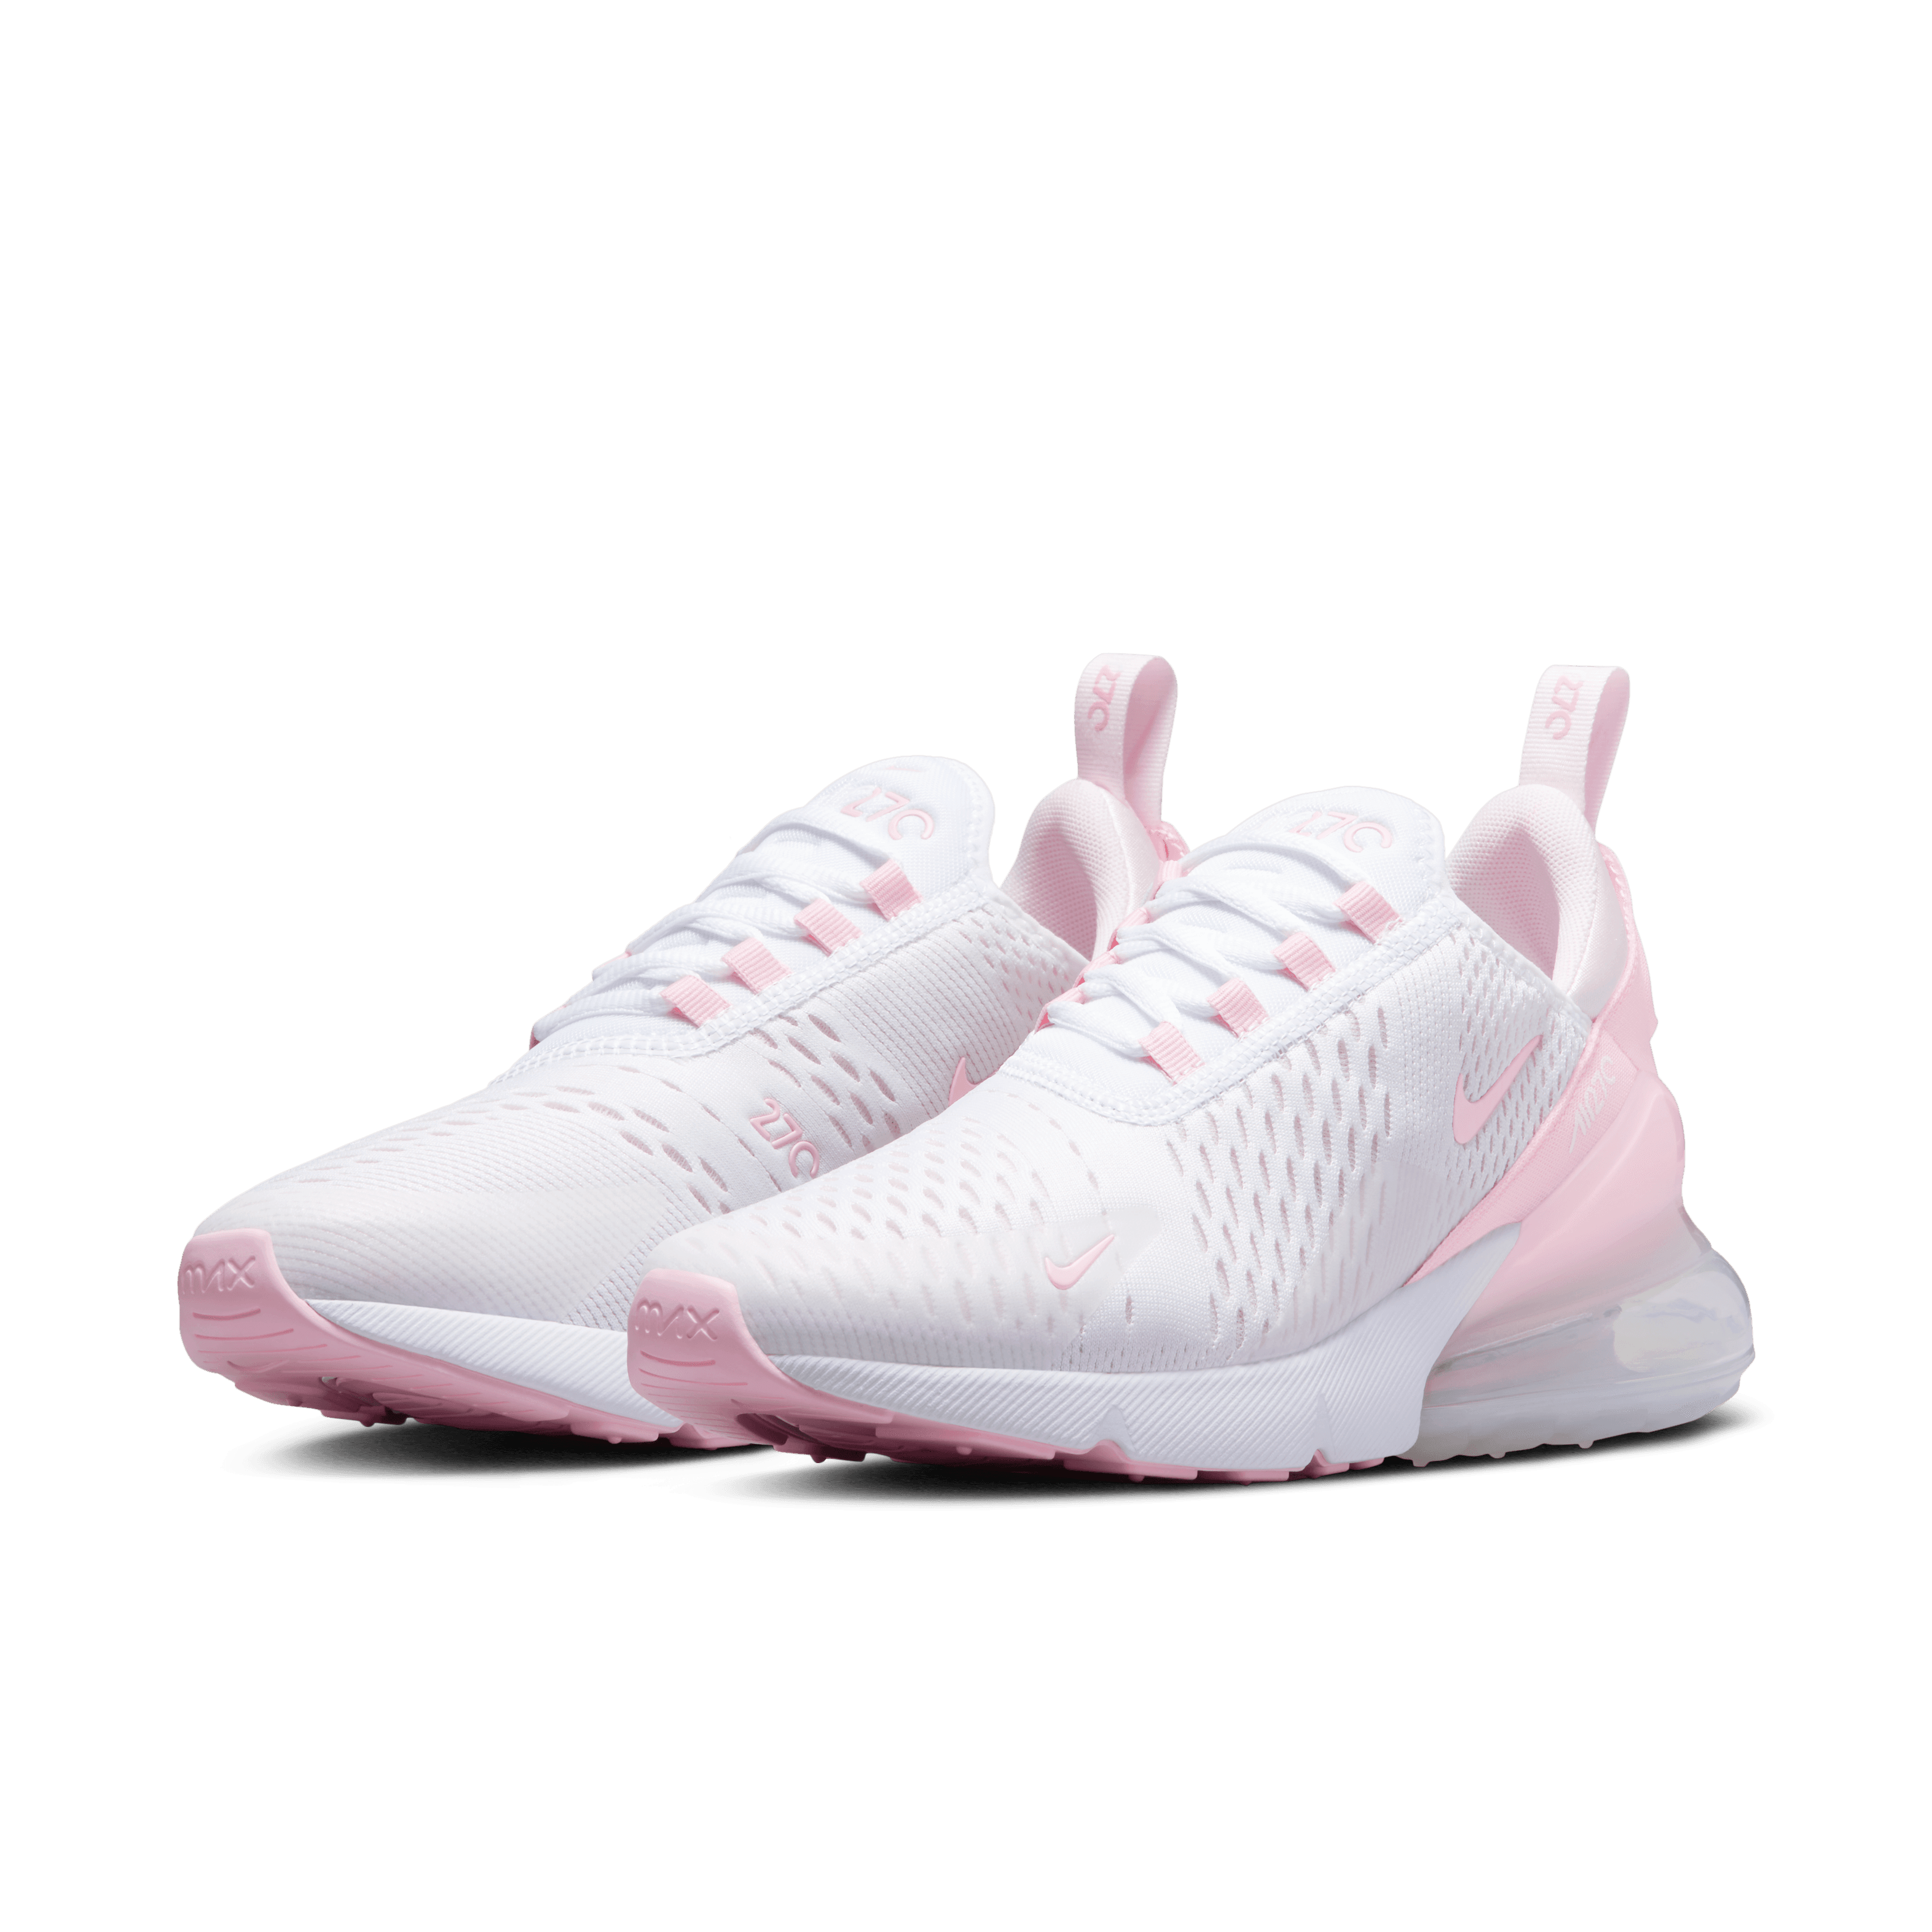 nike-womens-air-max-270-white-soft-pink-shoes-fj4575-100